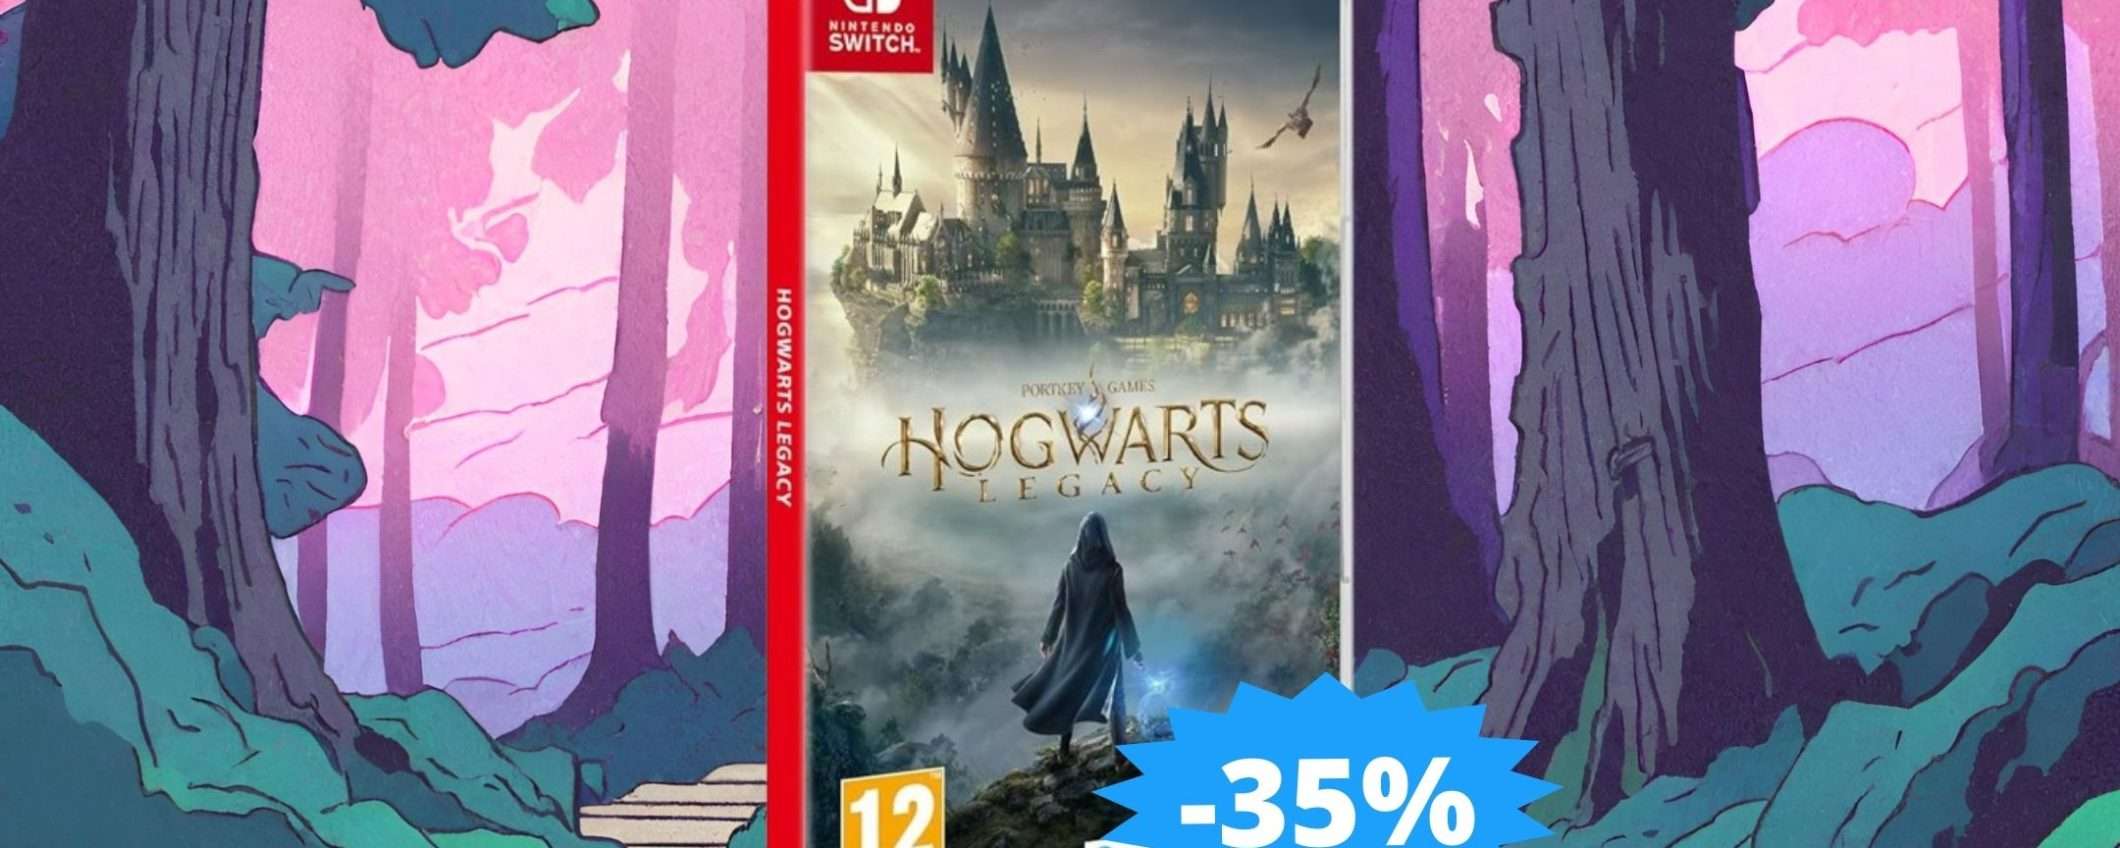 Hogwarts Legacy per Switch: MEGA sconto del 35% su Amazon